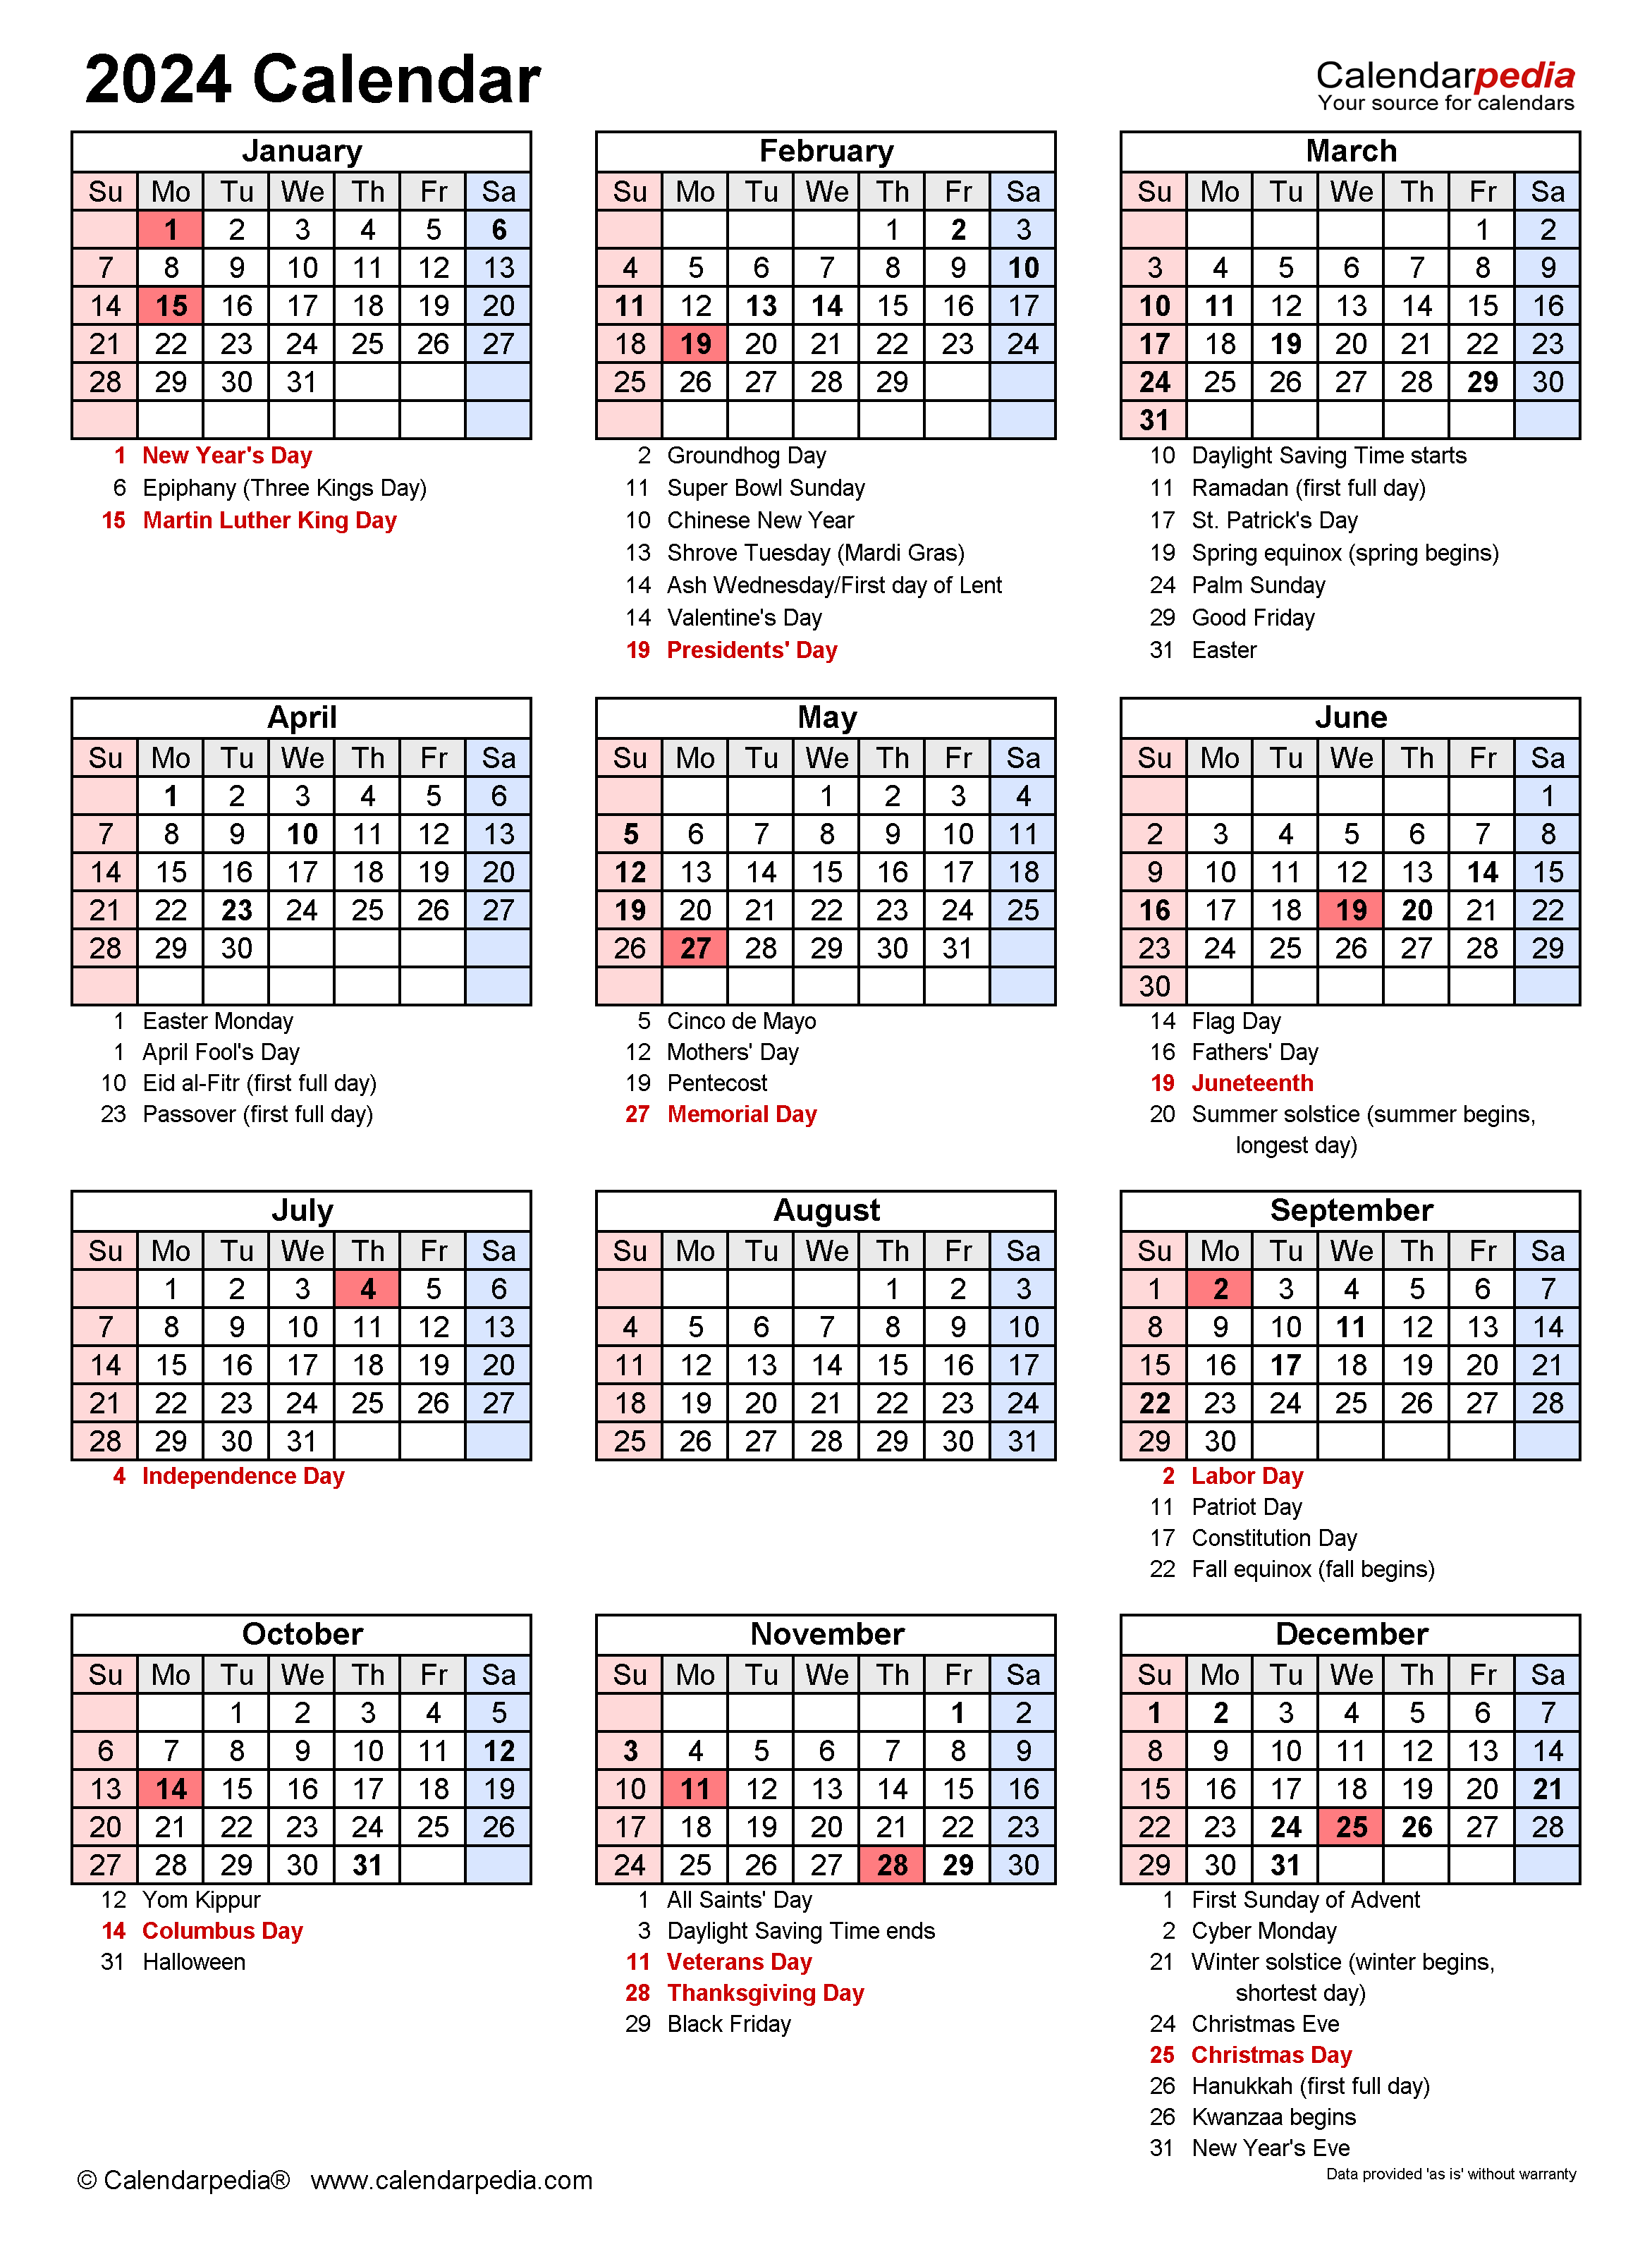 2024 Calendar Free Printable PDF Templates Calendarpedia - Free Printable 2024 Calendar With Us Holidays For Crafts